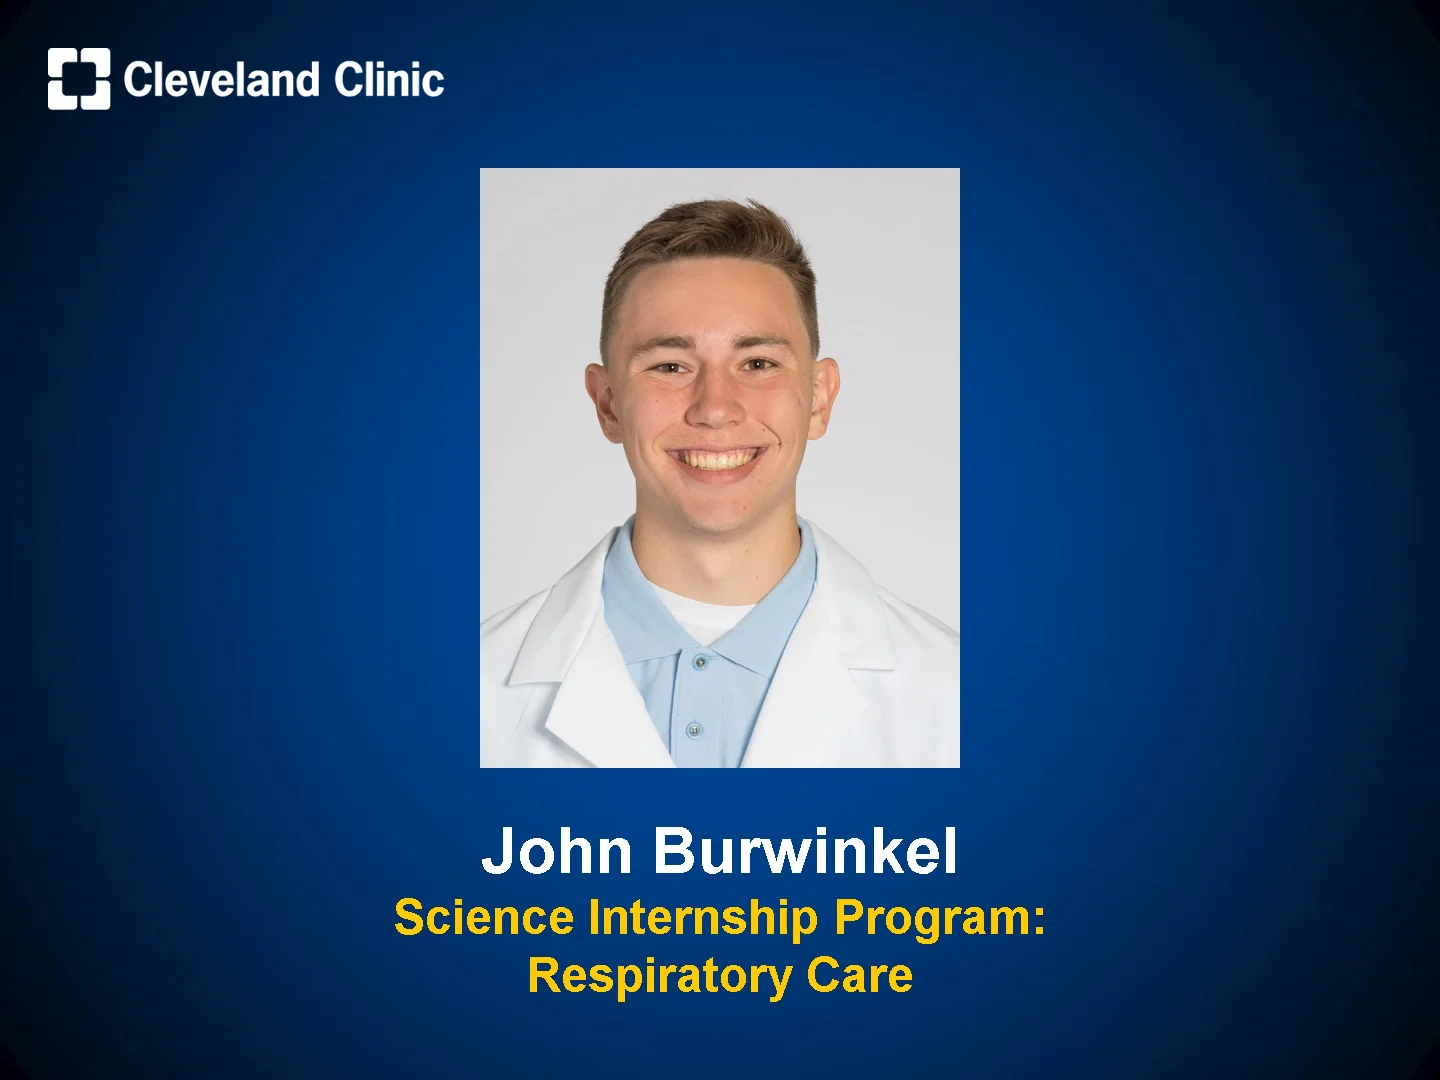 2018 Cleveland Clinic myRESEARCH™ Video: John Burwinkel on Vimeo